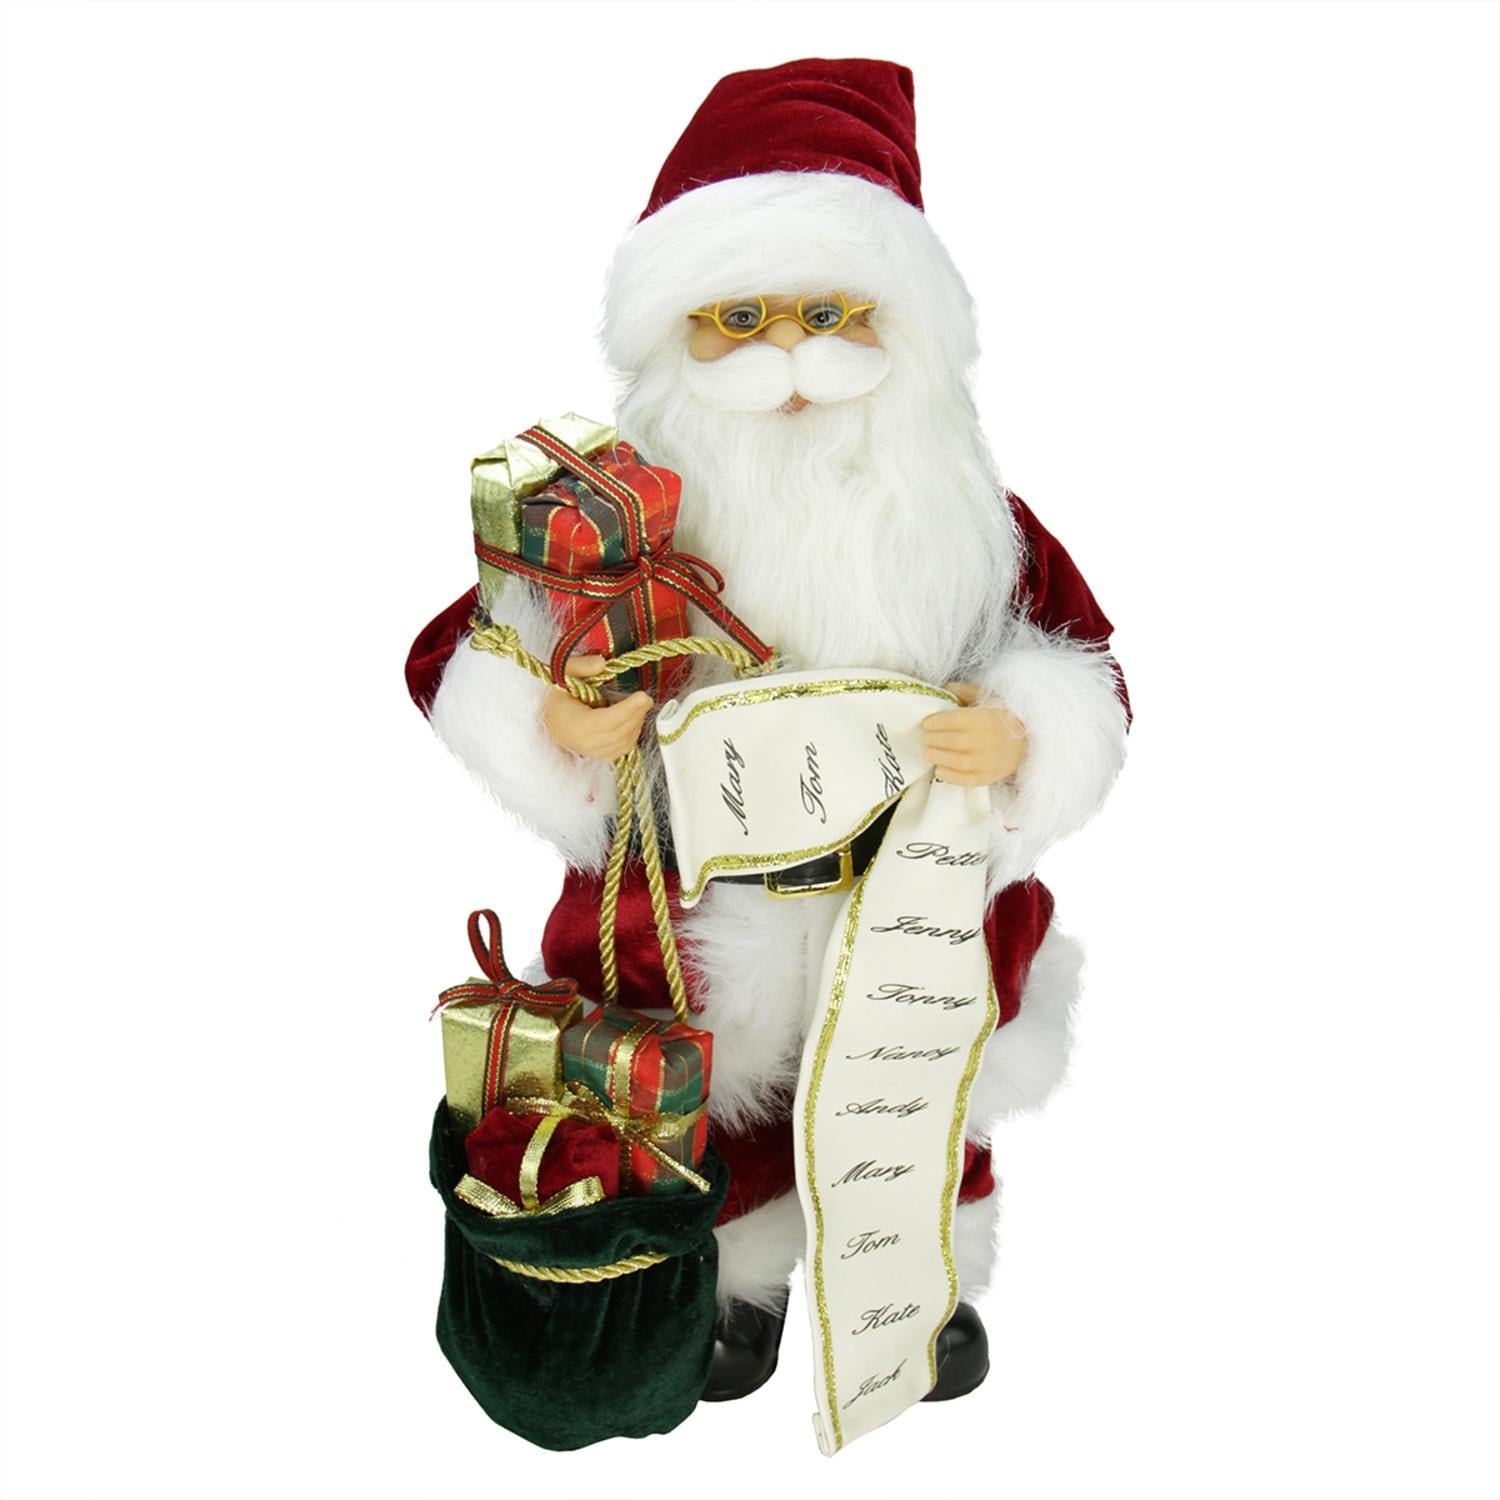 16" Traditional Standing Santa Claus Christmas Figure with Name List and Gift Bag